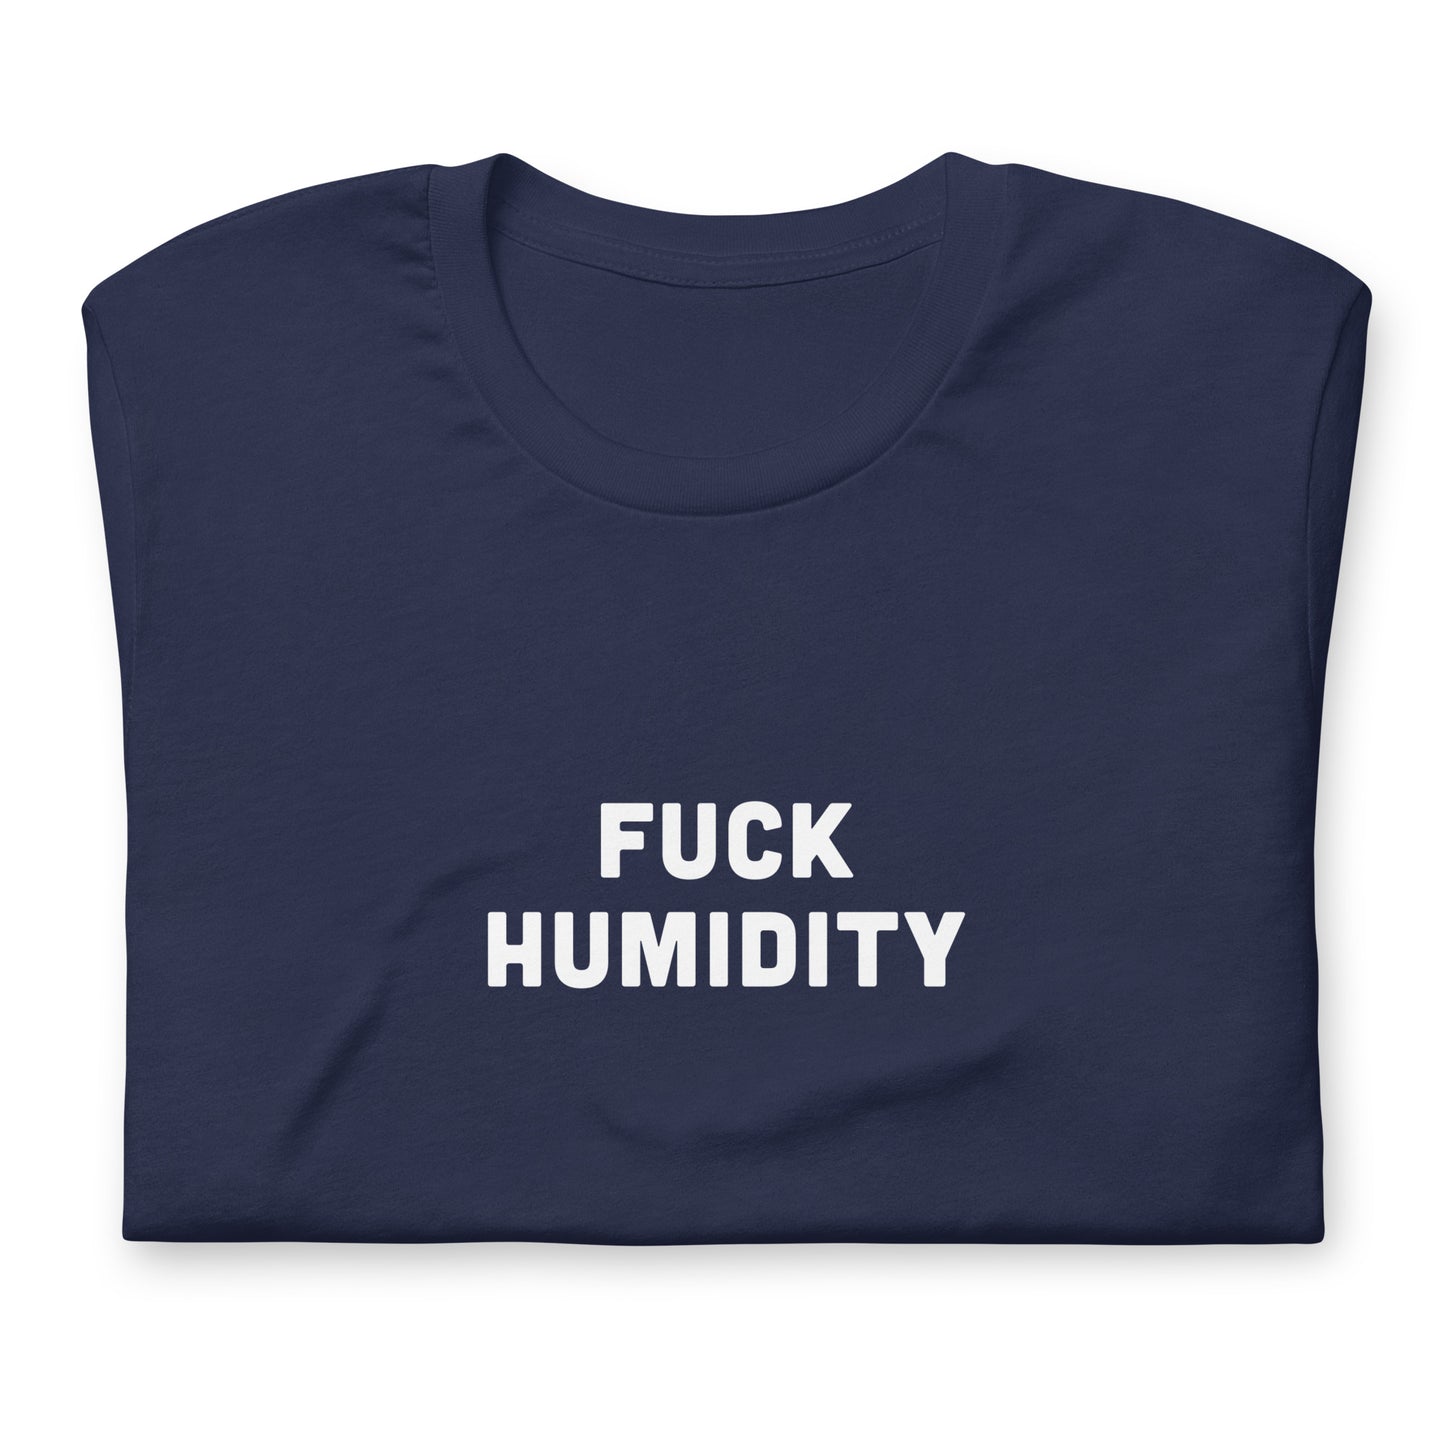 Fuck Humidity T-Shirt Size L Color Black